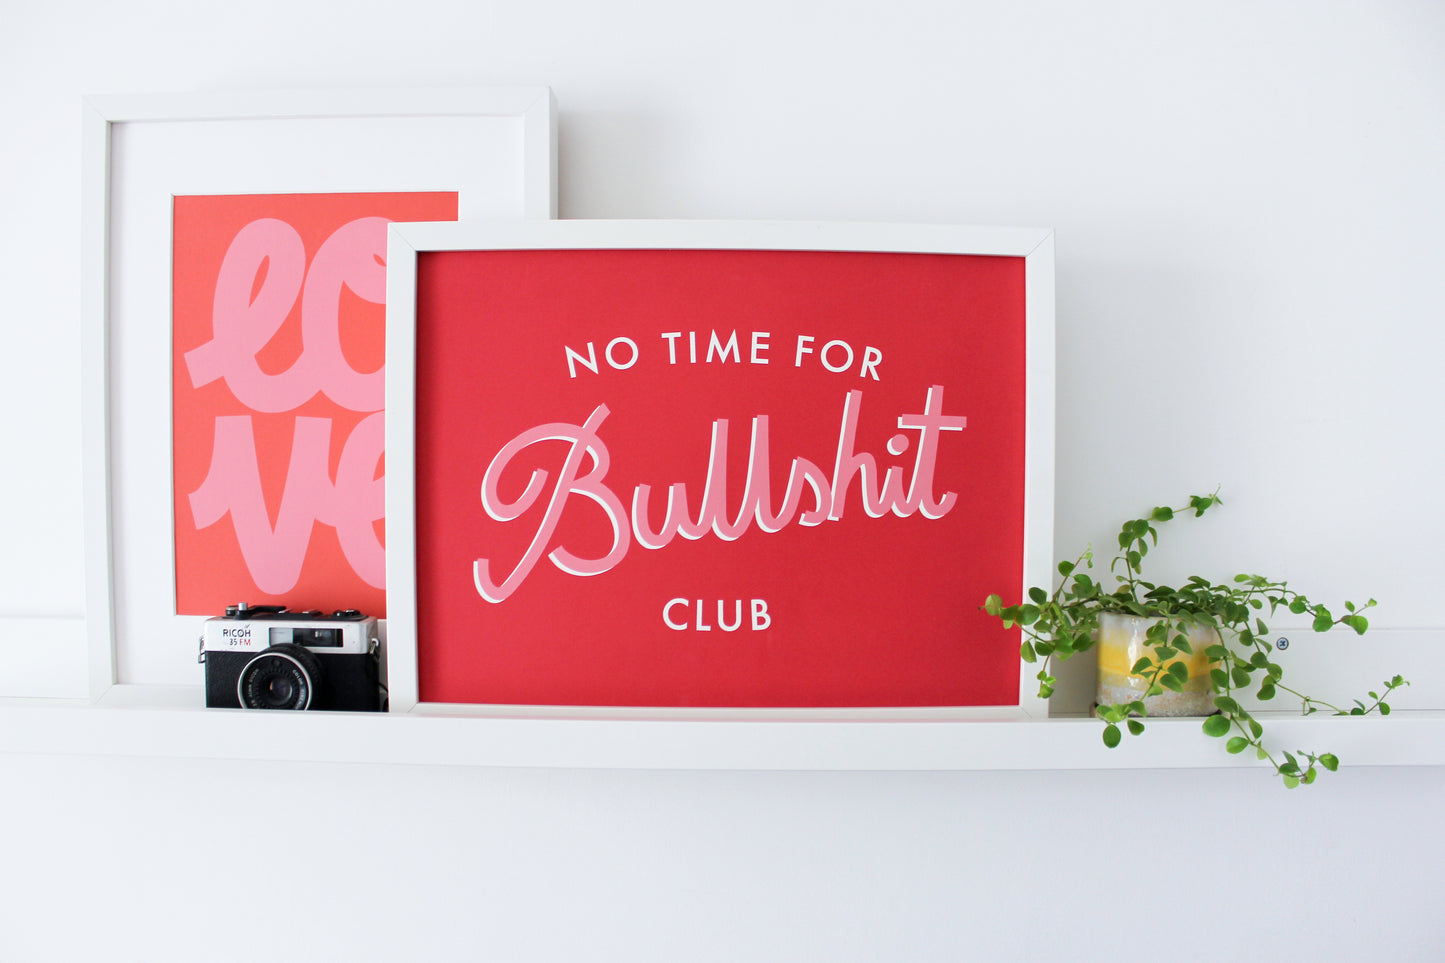 No Time For Bullshit Club, Art Print